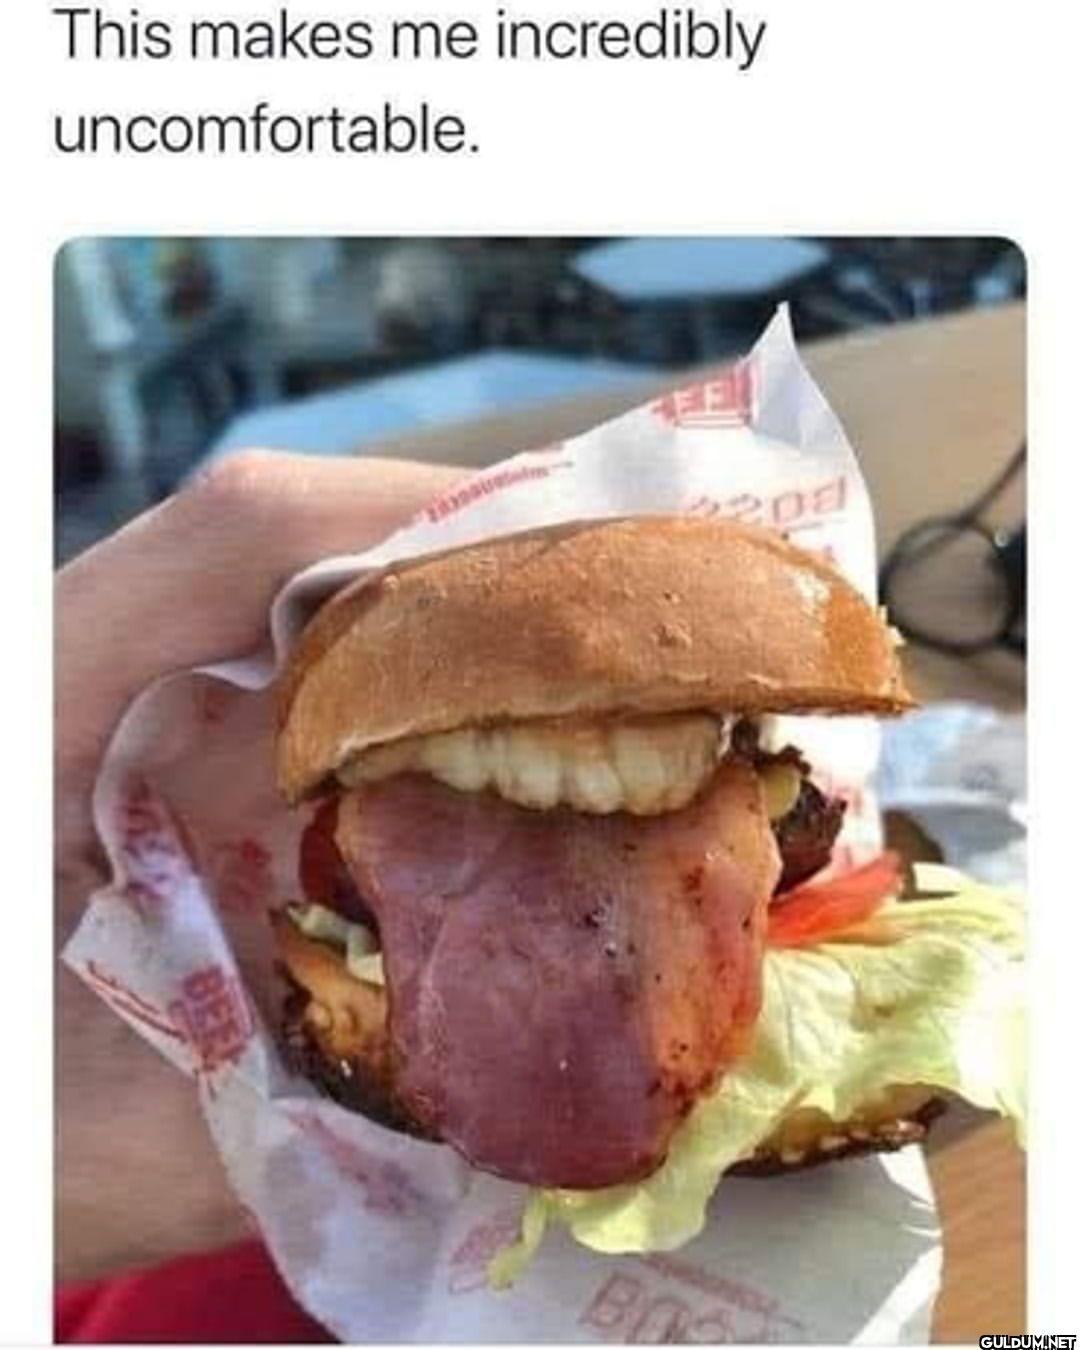 Burger looking like it...